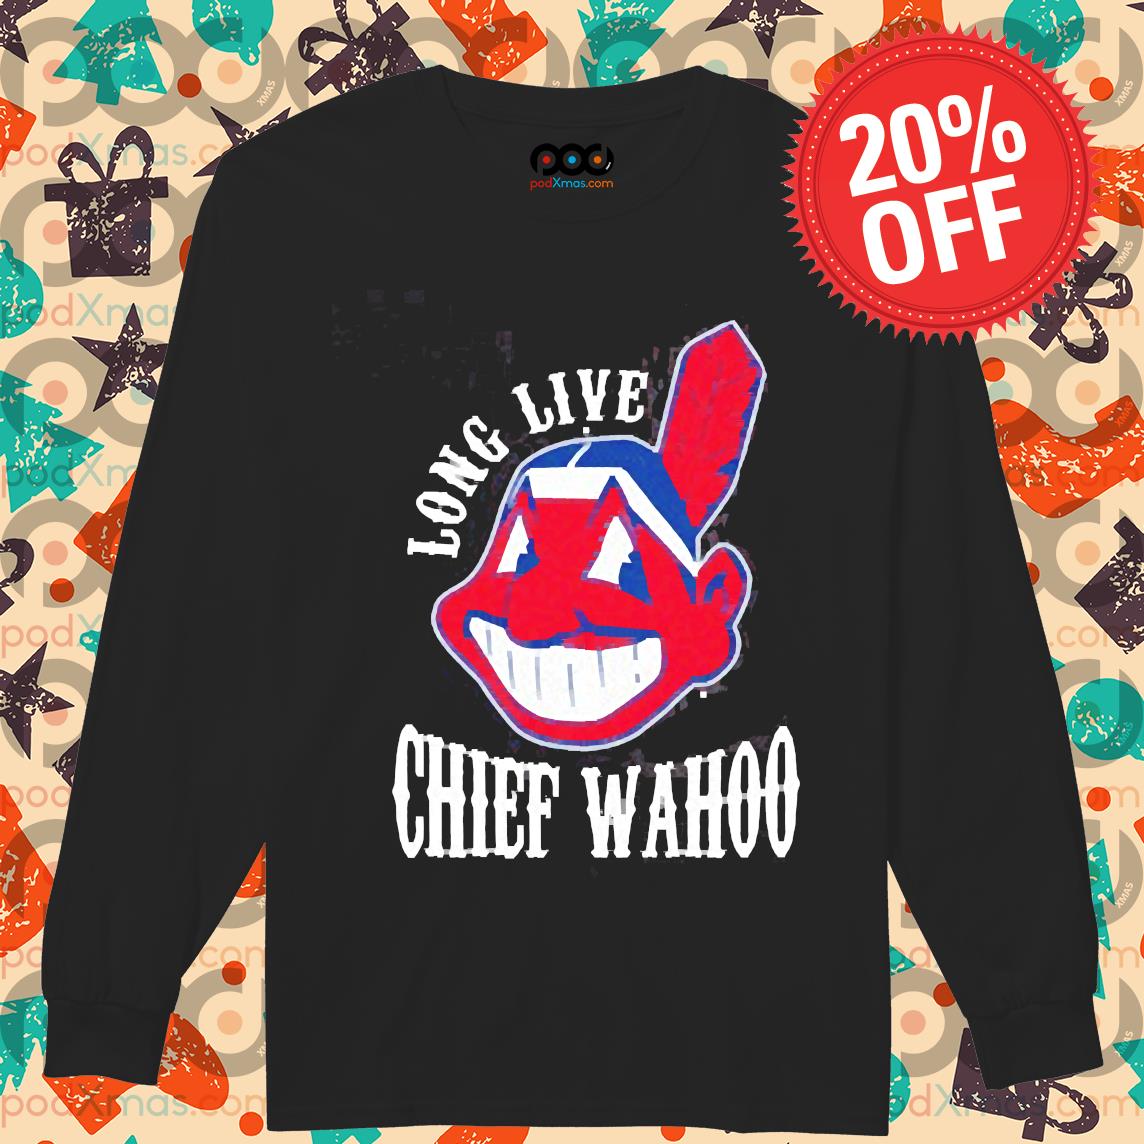 long live chief wahoo t shirt